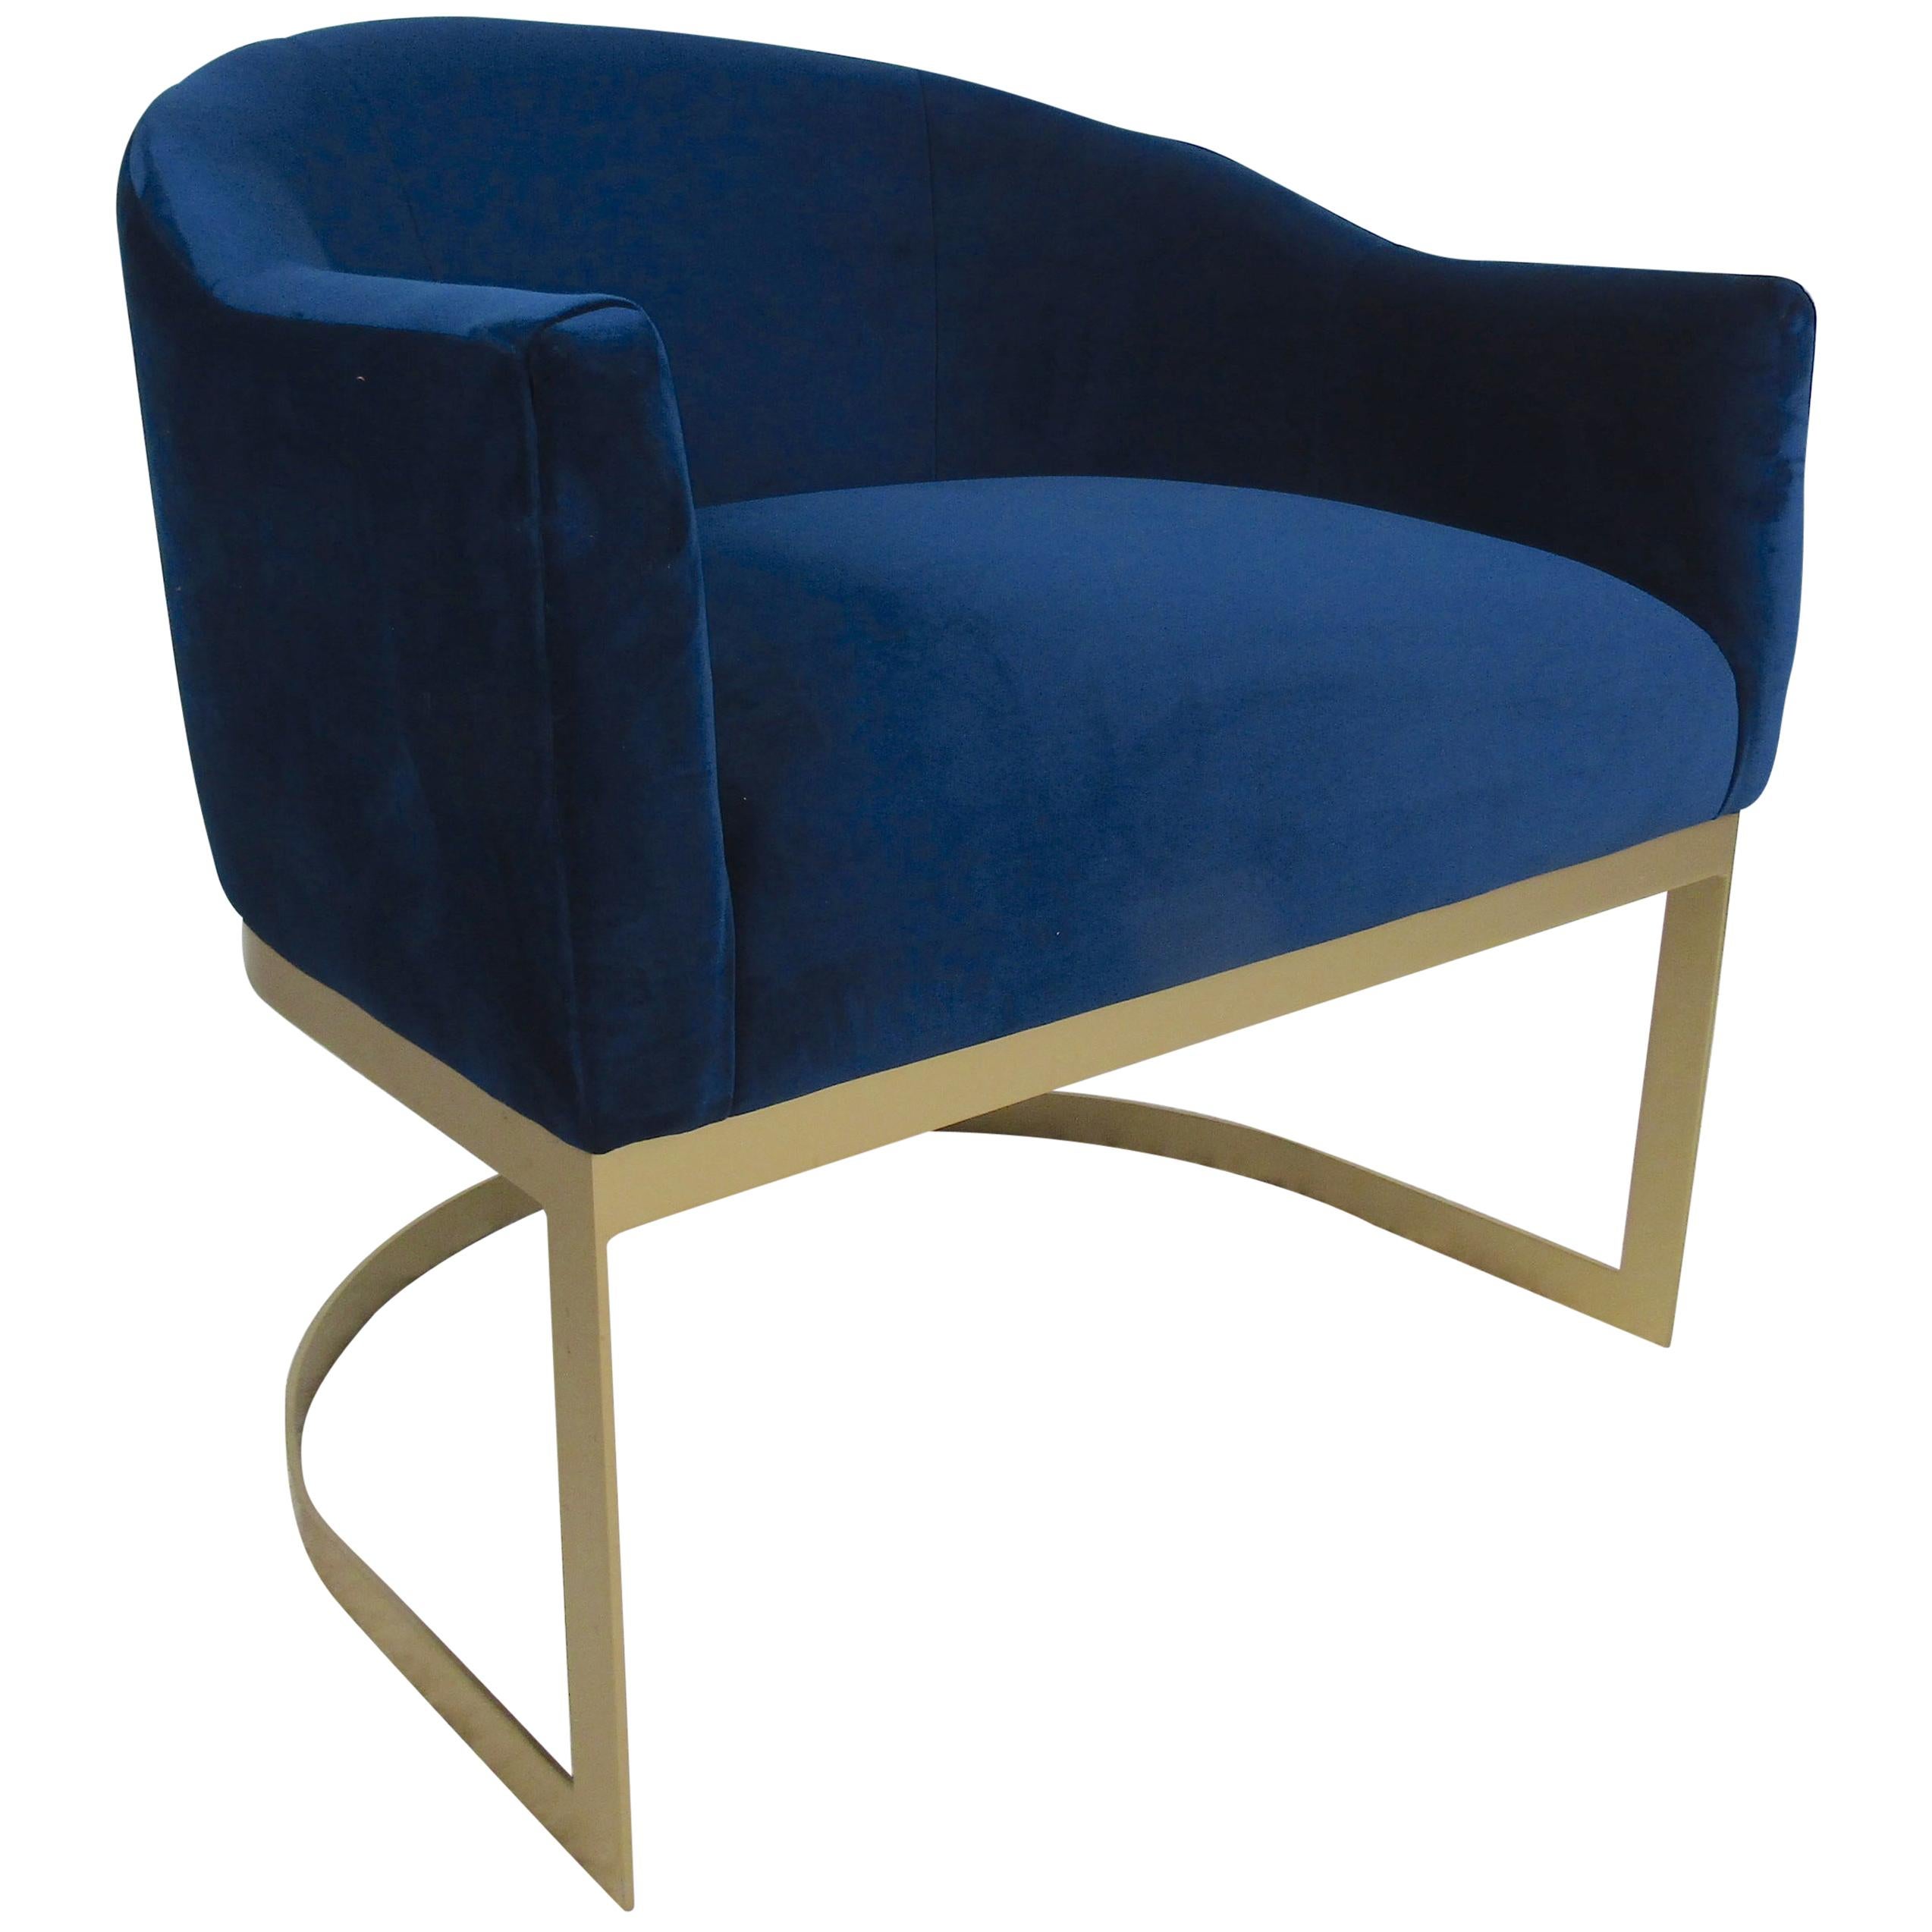 Unusual Vintage Cantilever Blue Lounge Chair